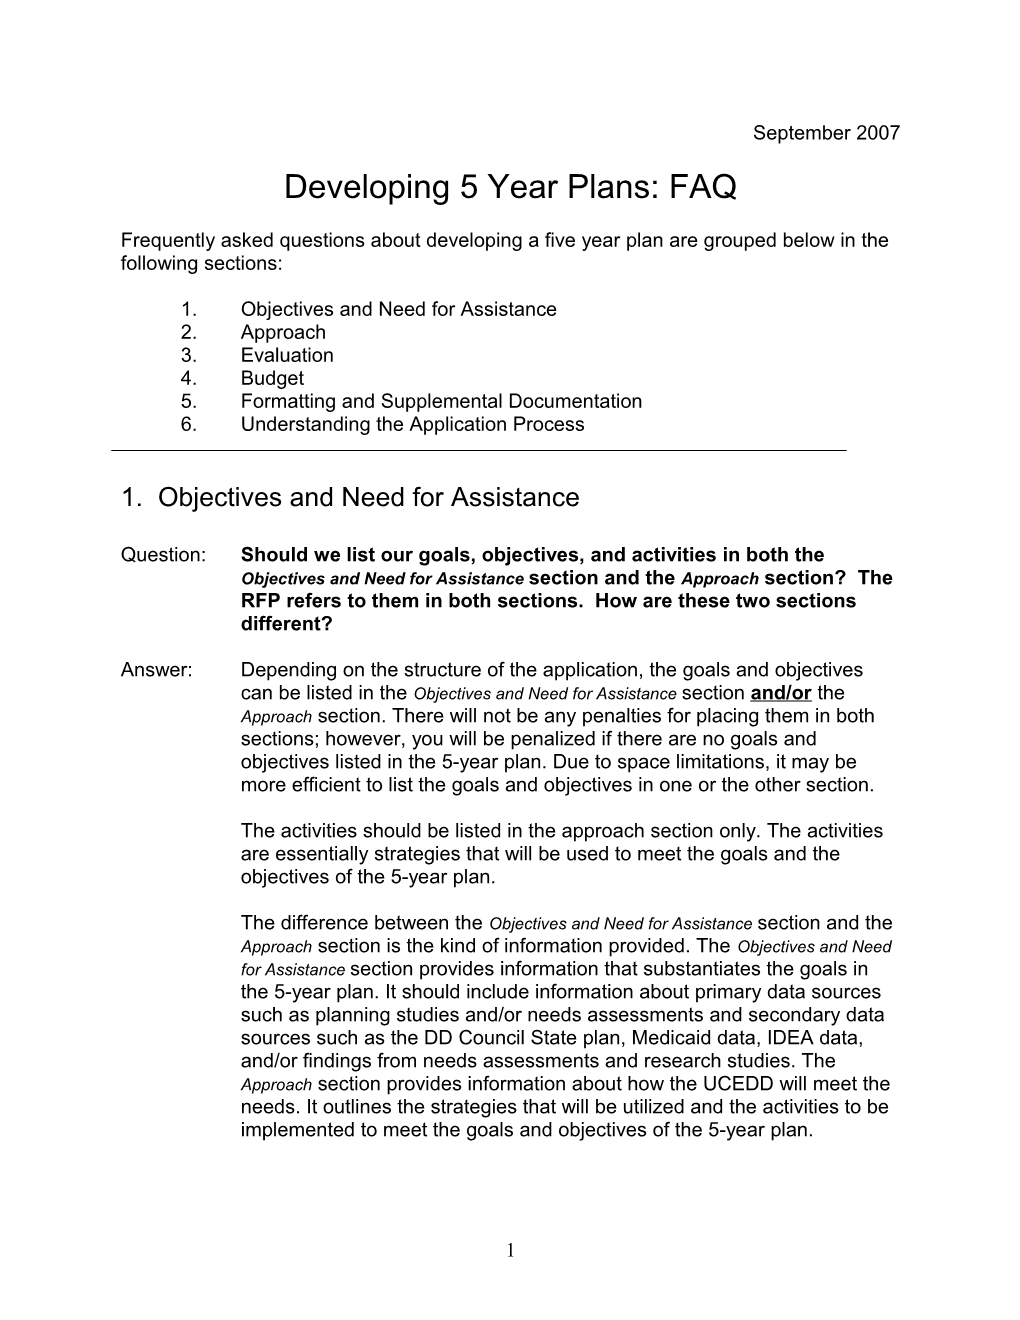 Developing 5 Year Plans: FAQ